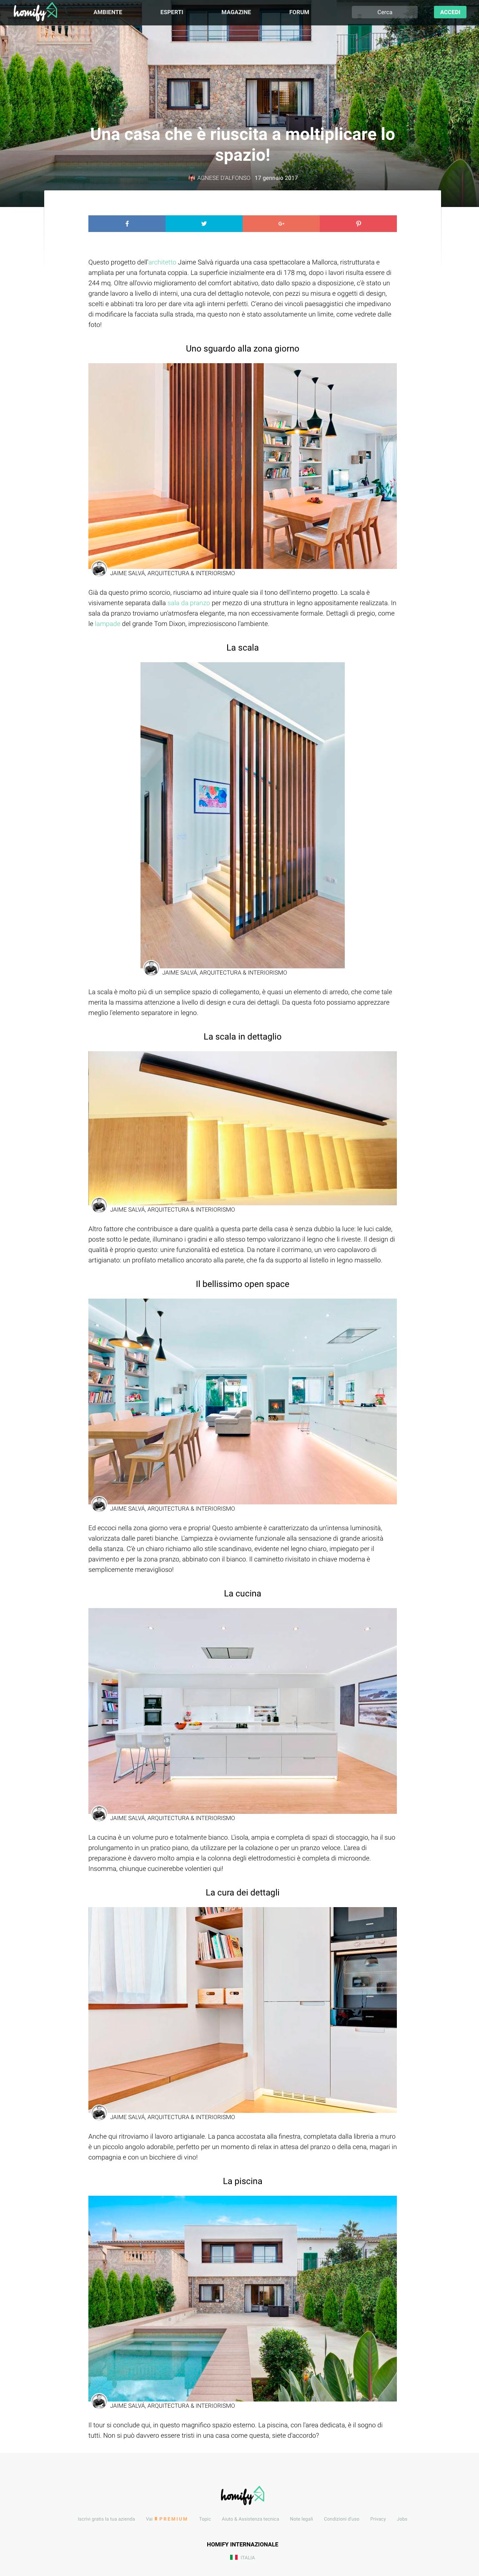 Jaime Salva Architecture Interior Design J279 Casa Blanca Y Matteo En Homify Italia